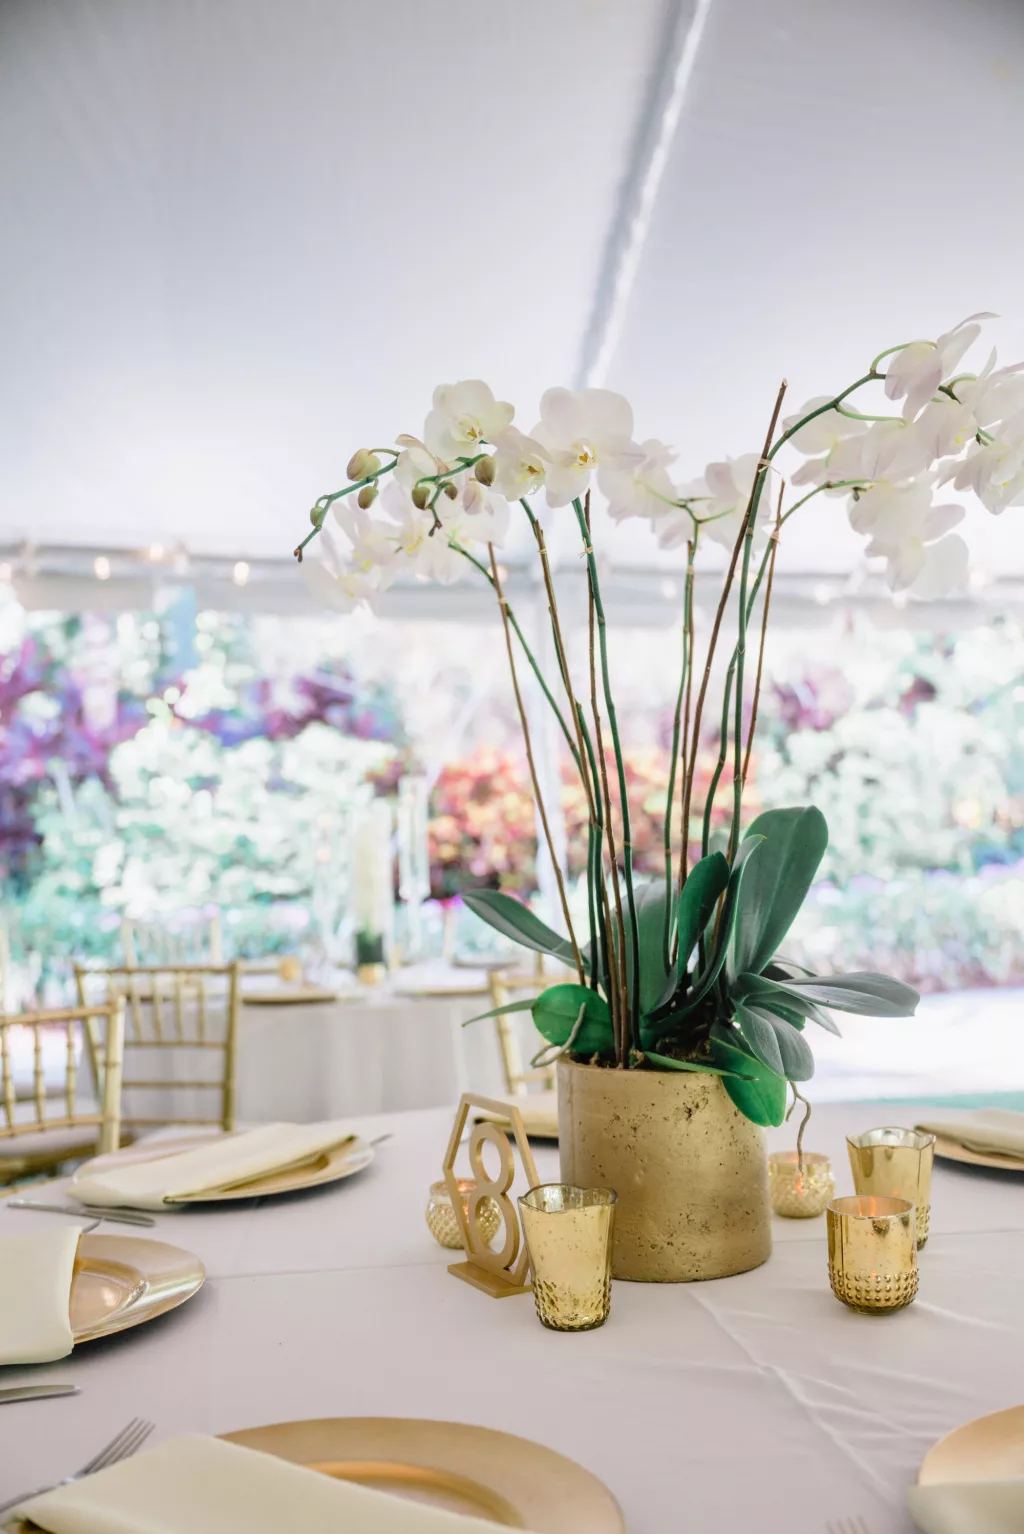 Classic White Orchid and Gold Votive Garden Wedding Reception Centerpiece Decor Ideas